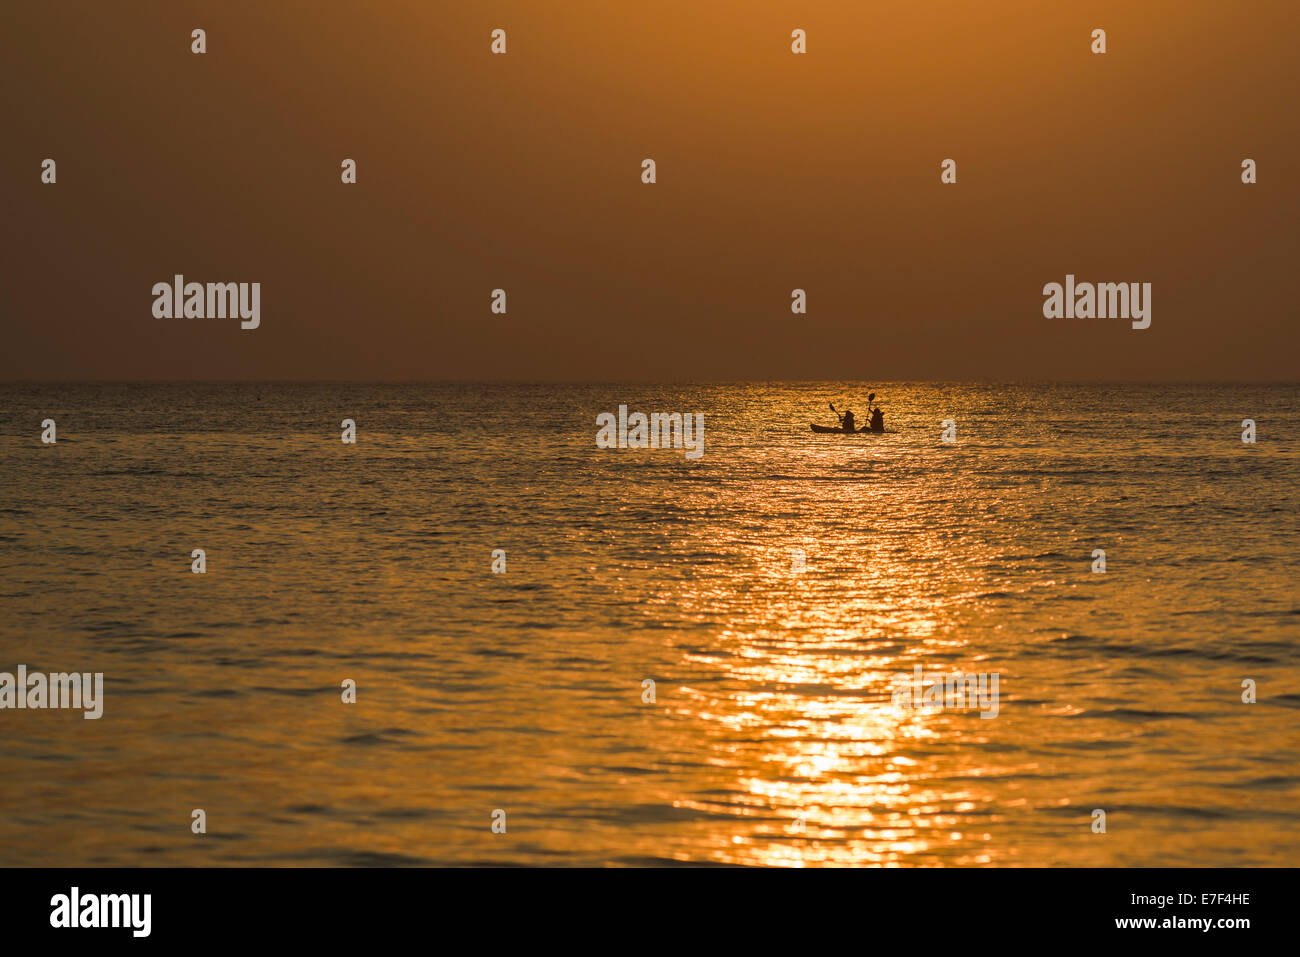 Two kayakers in the open sea at sunset, Palolem Beach, Canacona, Goa, India Stock Photo